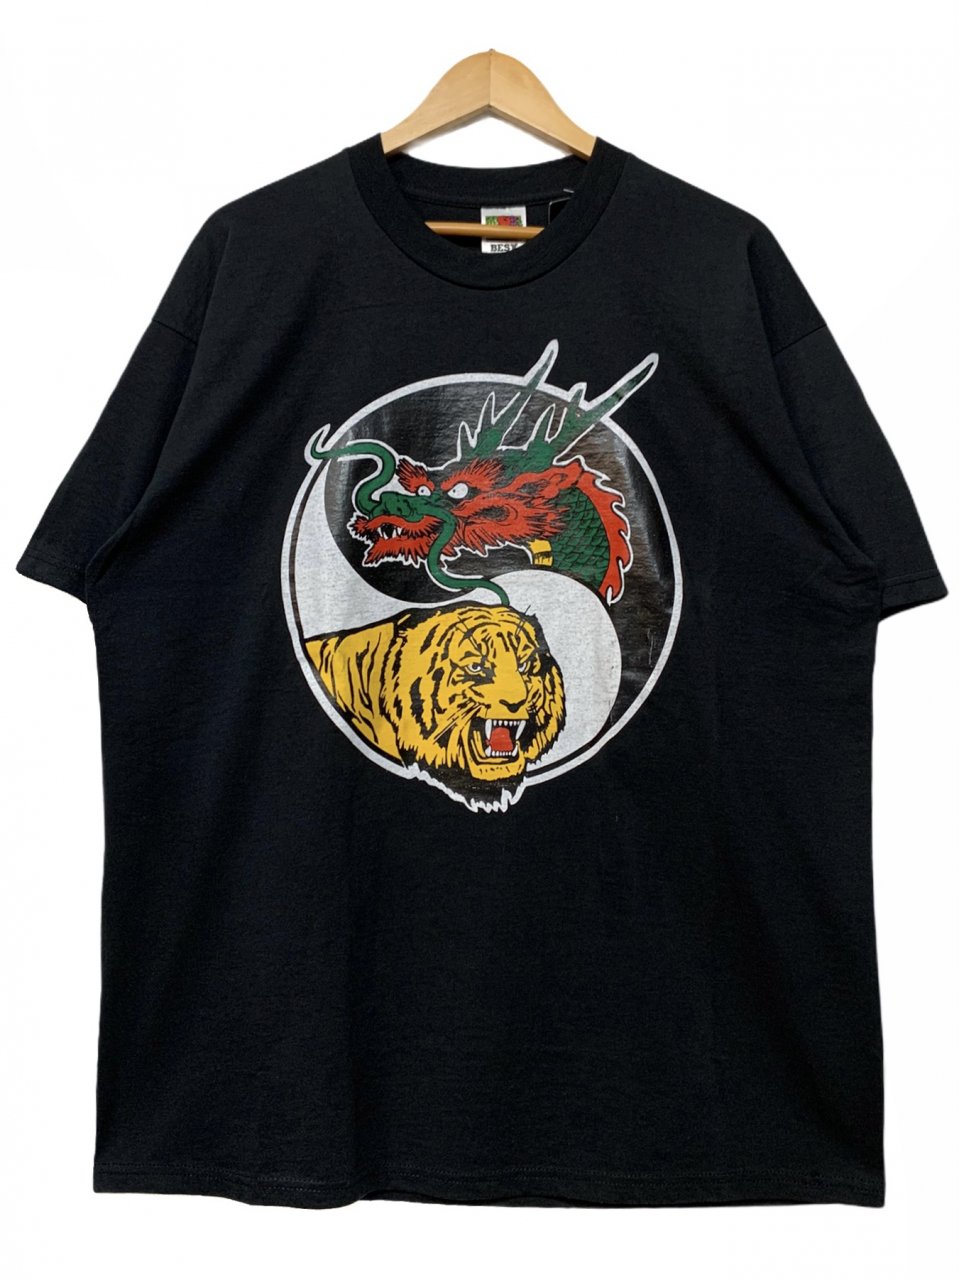 90s～00s UNKNOWN Tiger & Dragon Print S/S Tee 黒 XL タイガー 